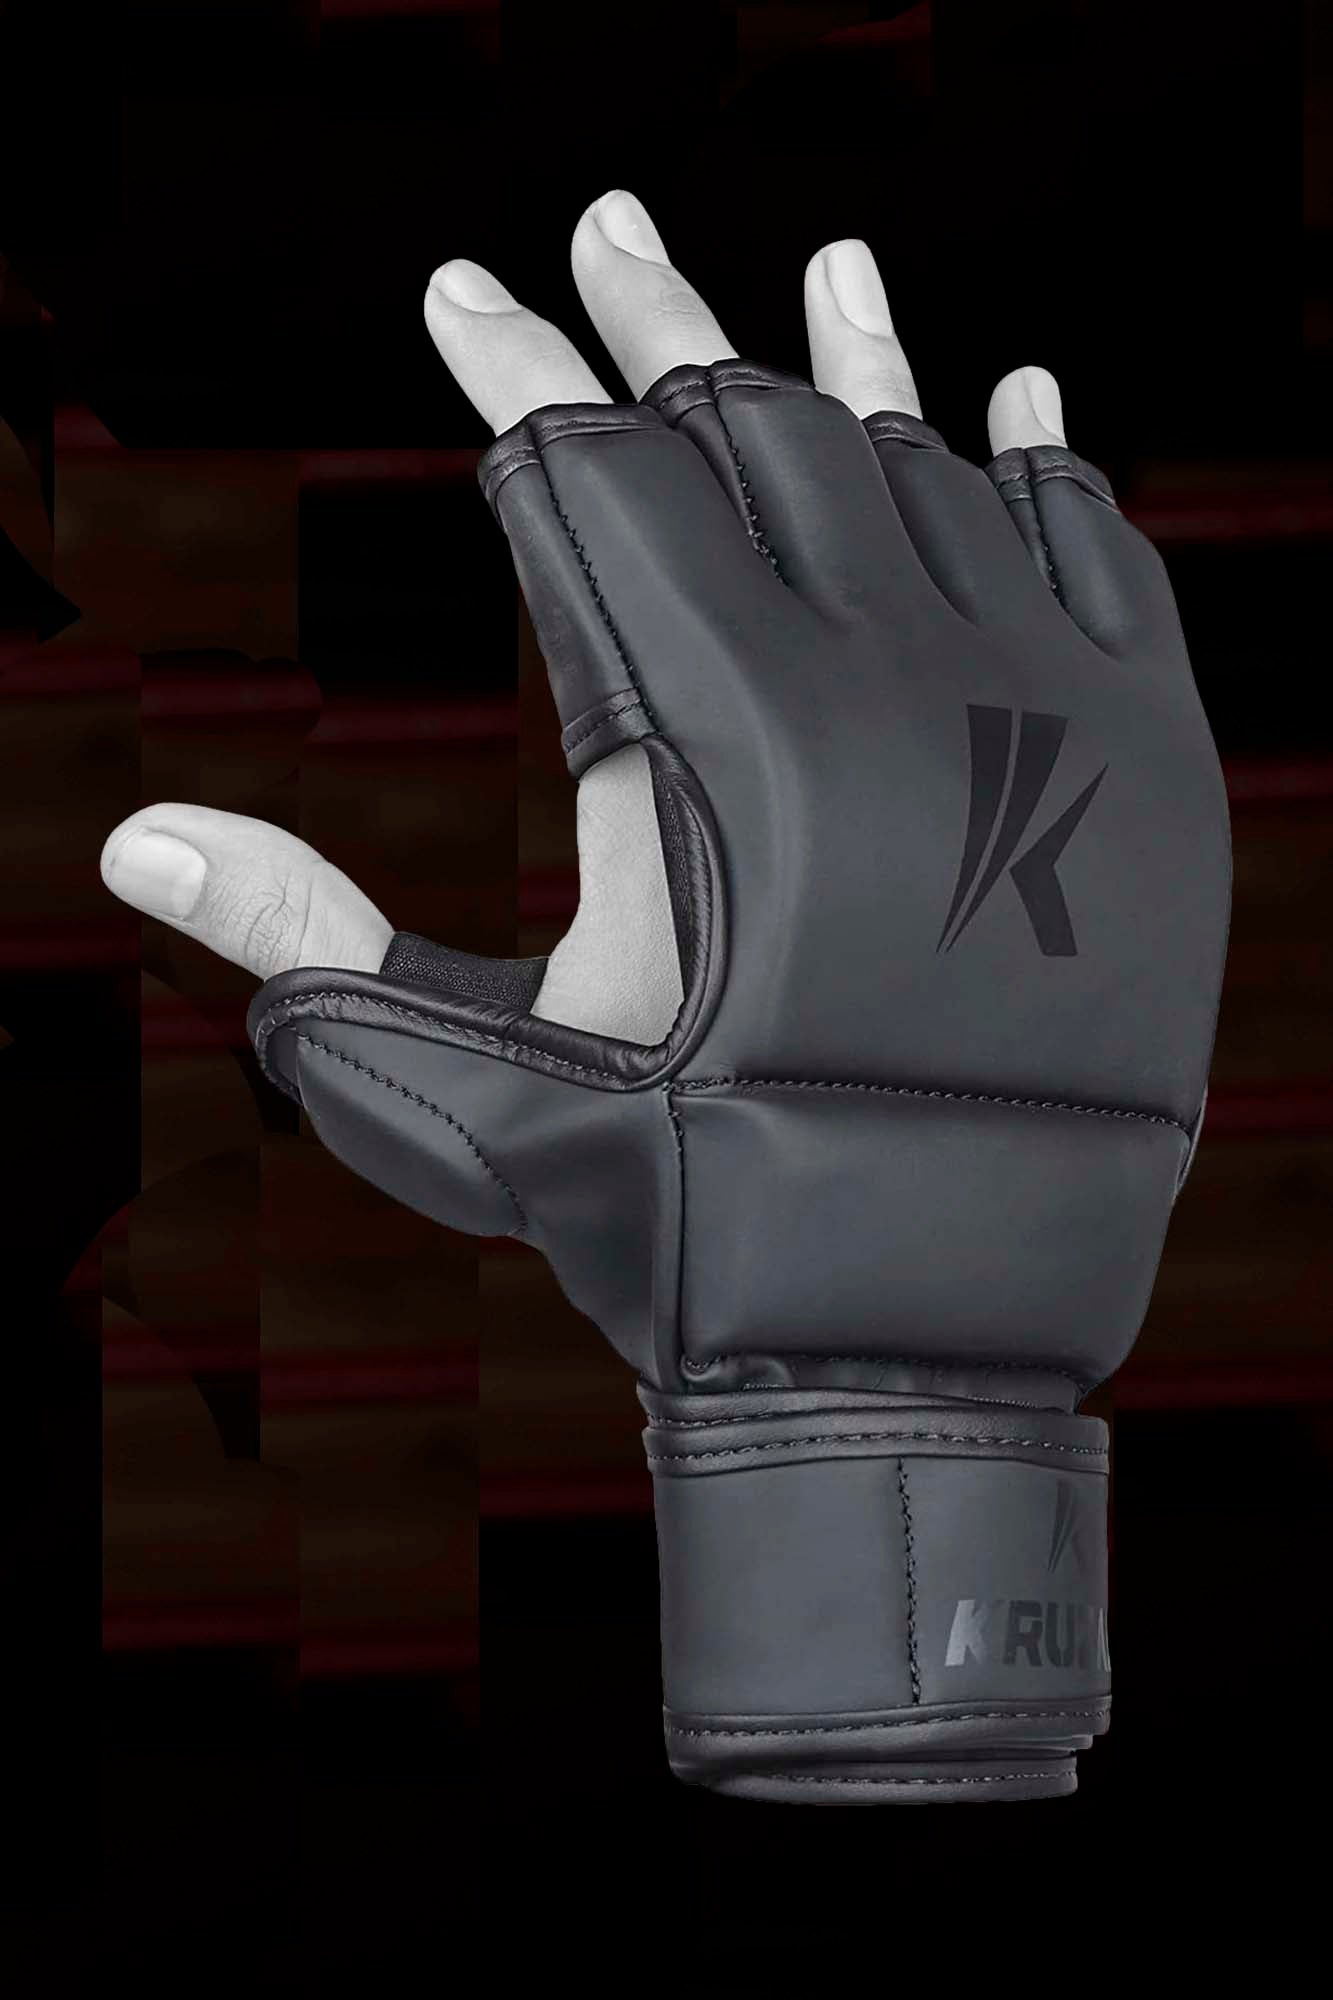 Matte-Black Kruzak Unisex MMA Gloves Hand Wraps with Open Palms